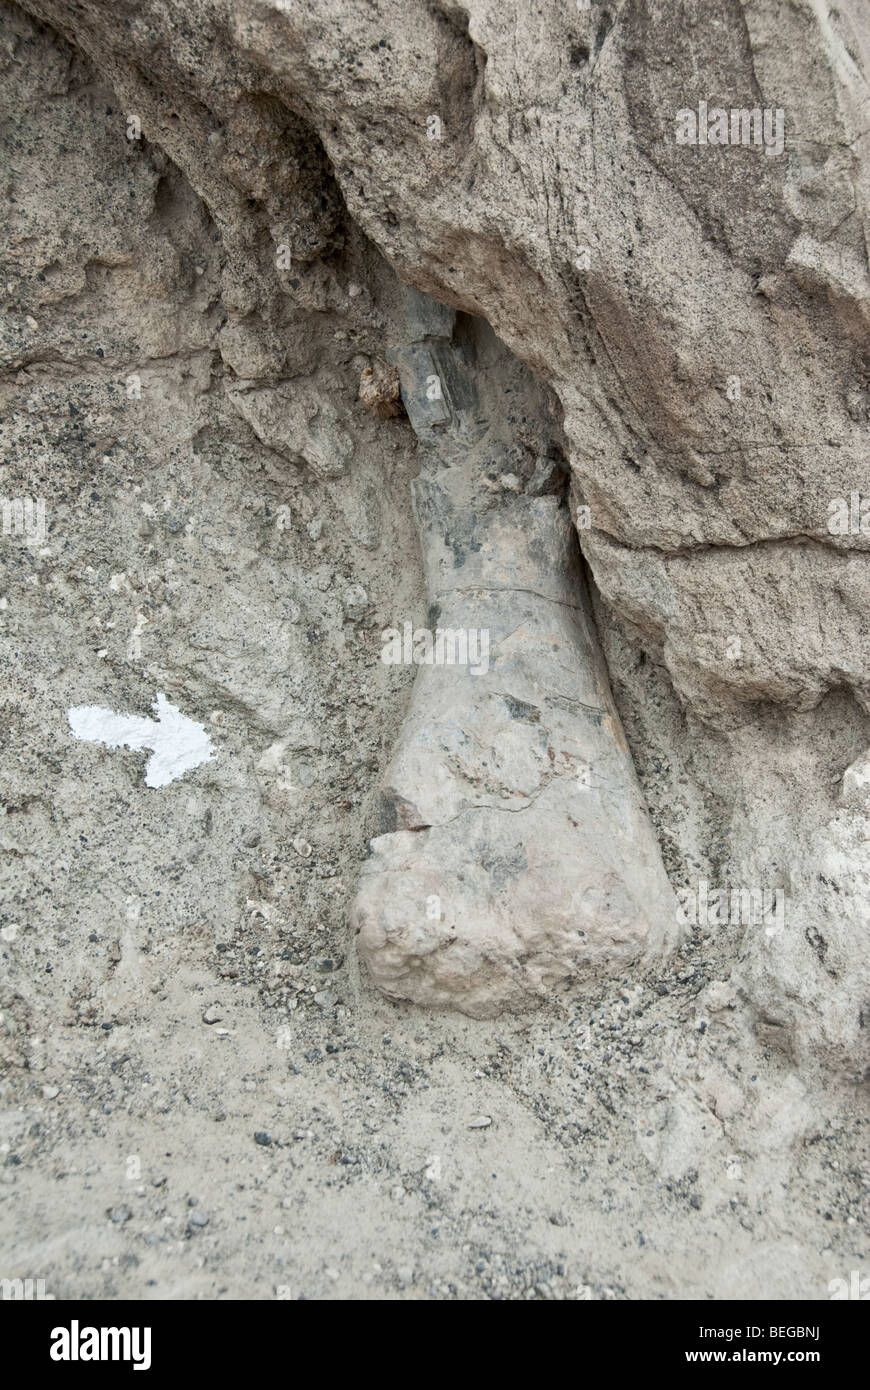 Colorado Dinosaur National Monument Fossil Discovery Trail white arrow points to leg bone Stock Photo